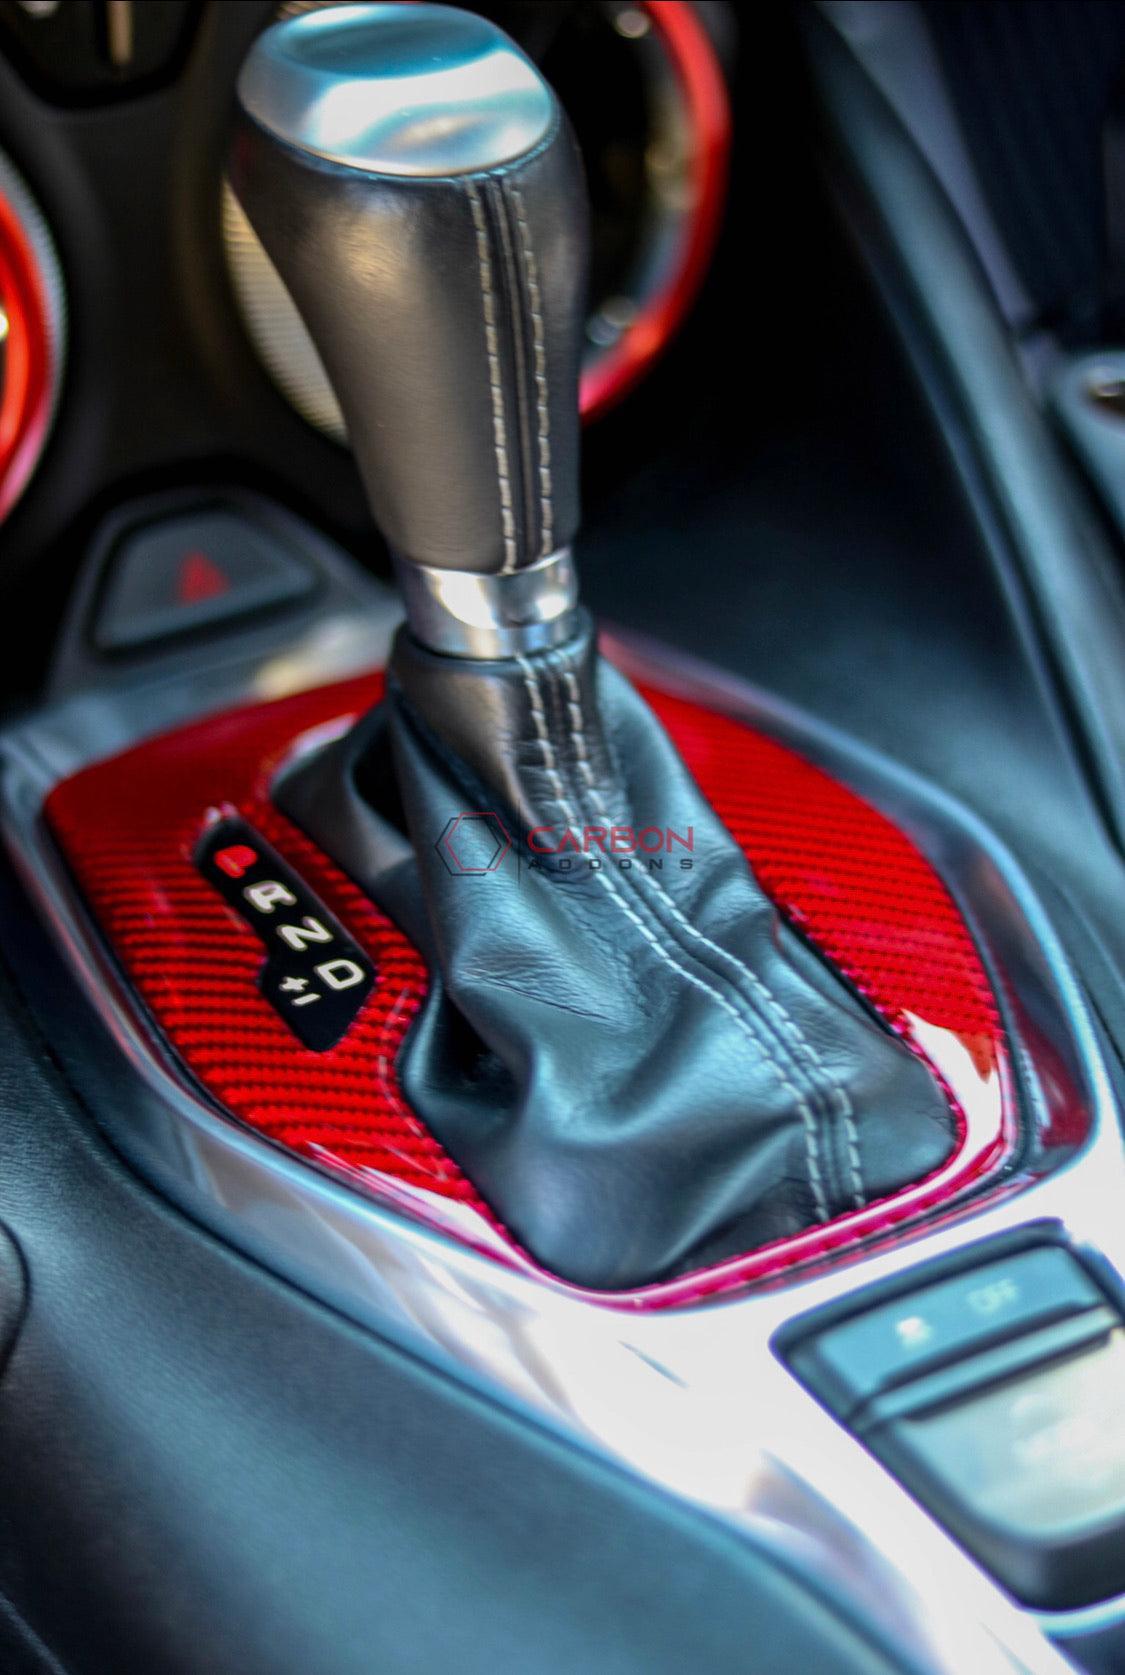 2016-2024 Camaro Real Carbon Fiber Gear Shift Trim Overlay - carbonaddons Carbon Fiber Parts, Accessories, Upgrades, Mods